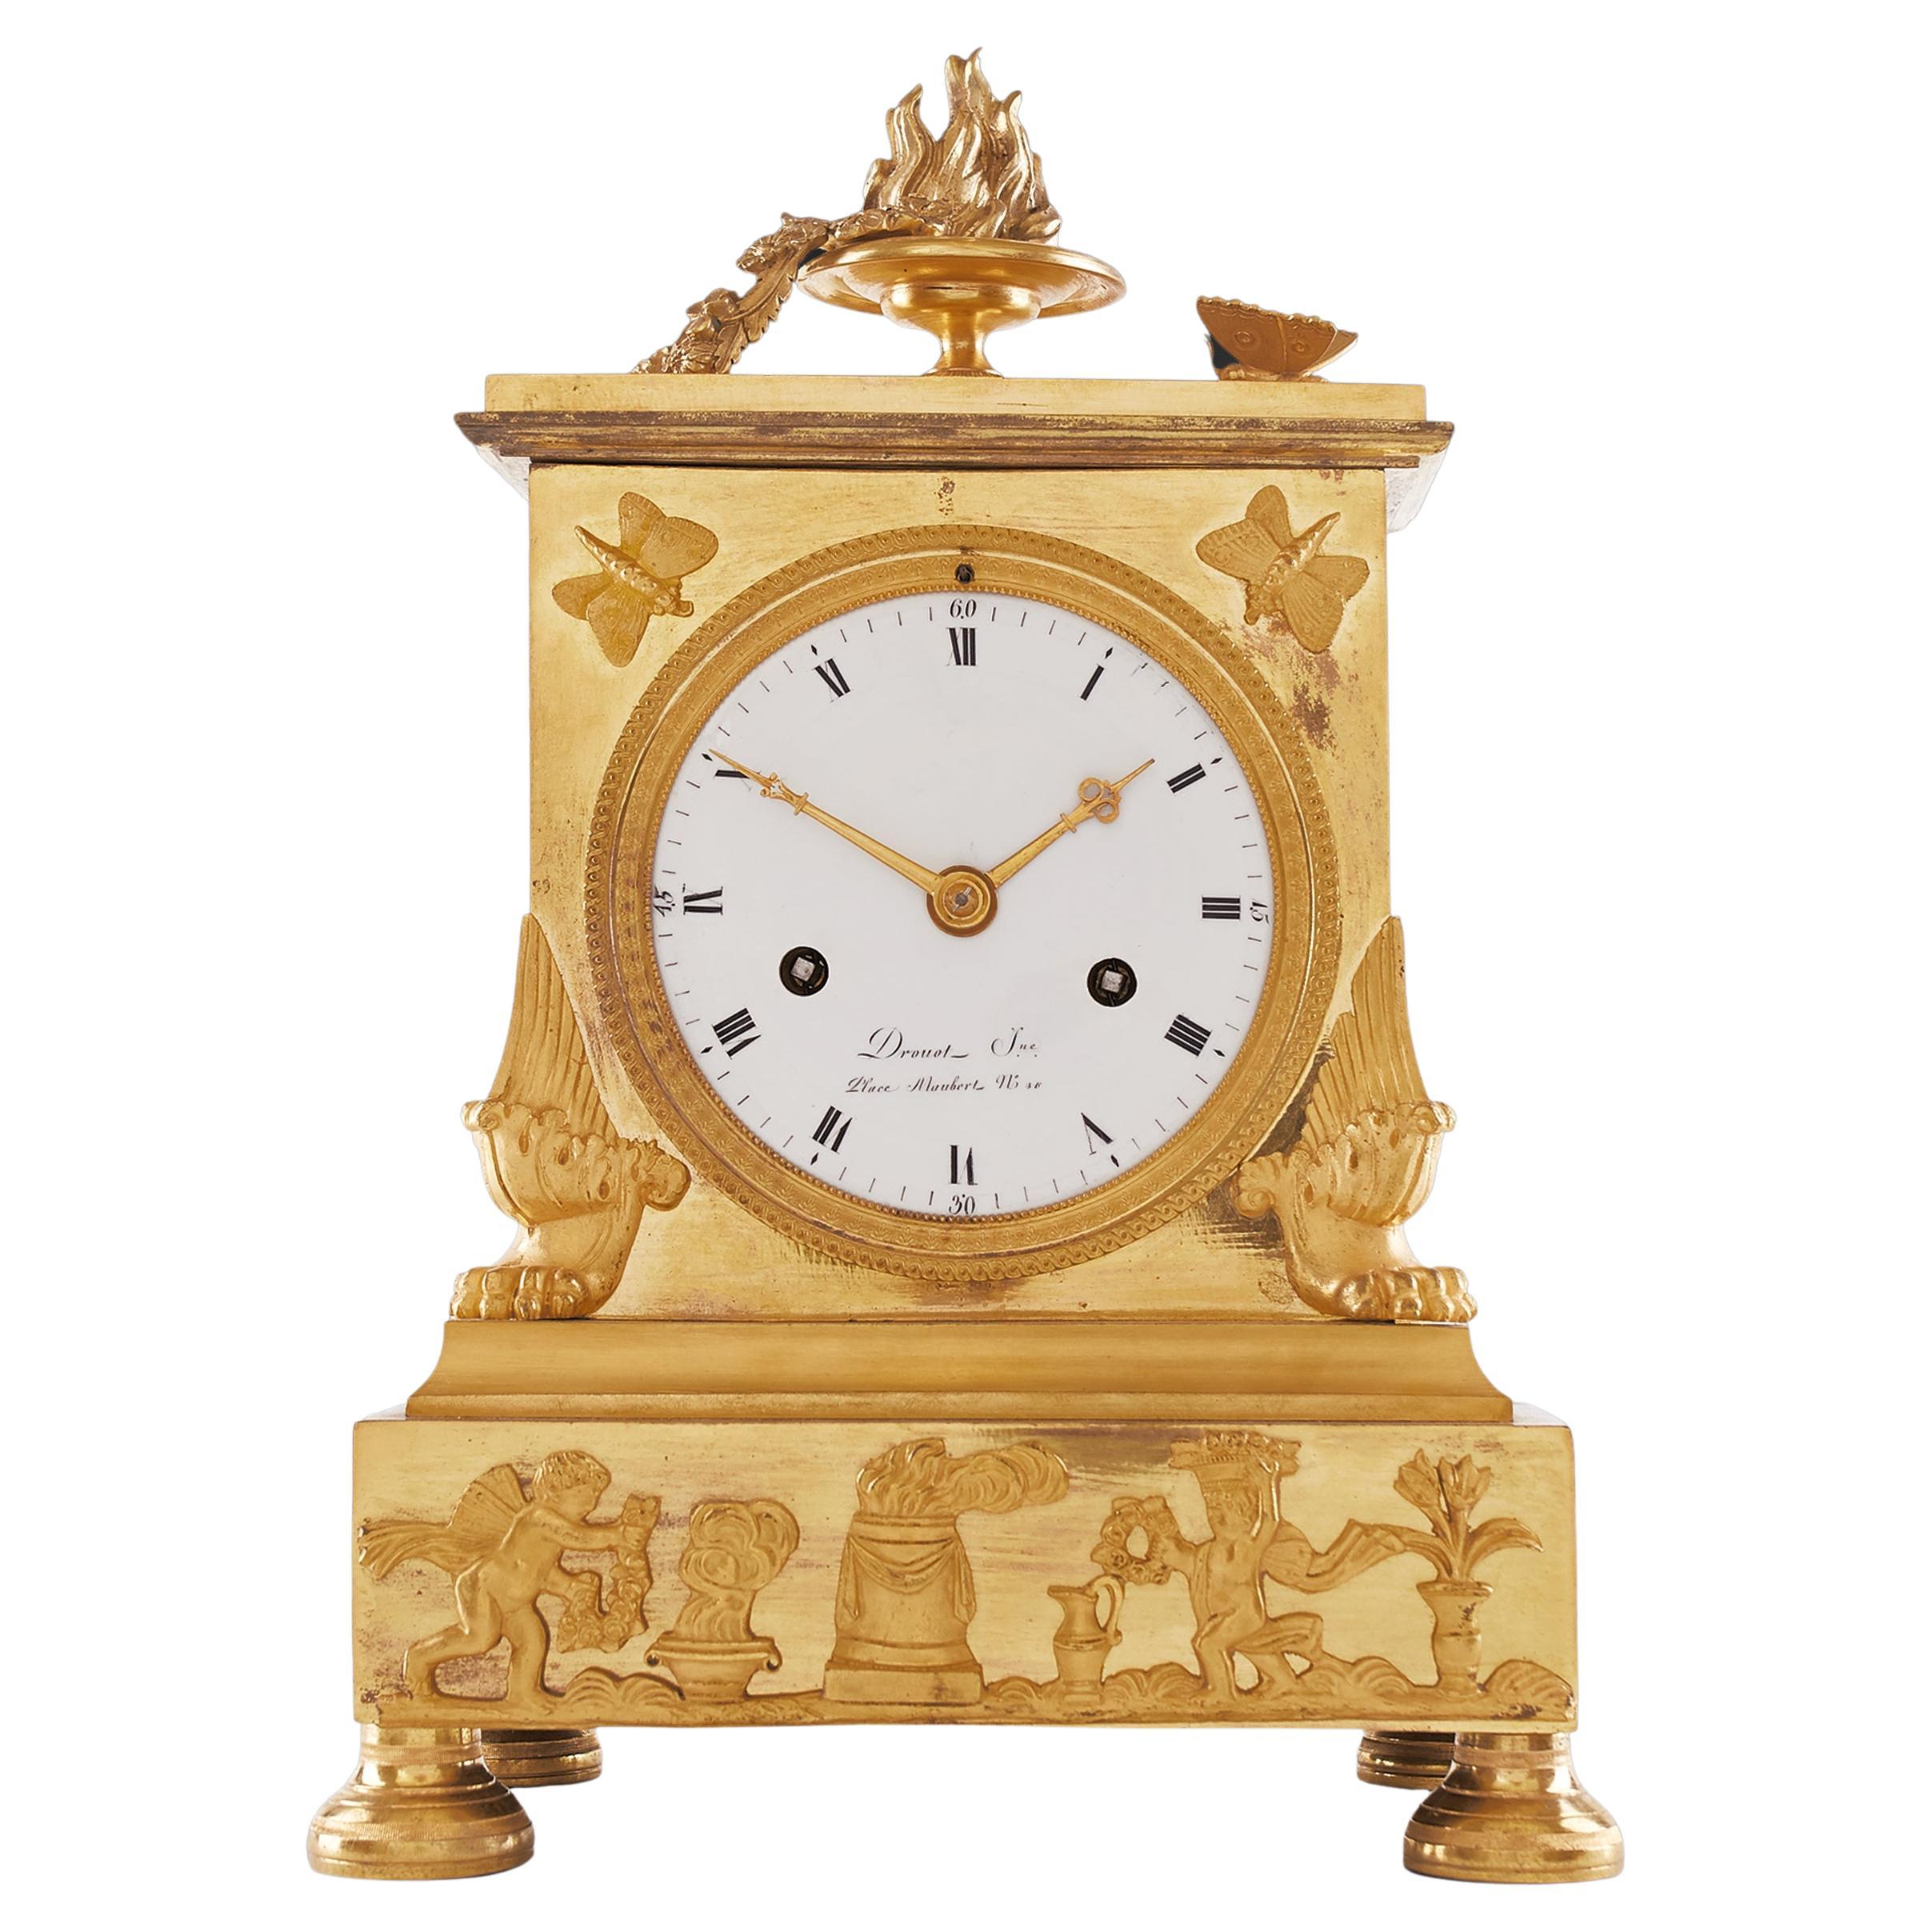 Reloj de chimenea Siglo XIX Estilo Imperio de Drouot Place Moubert